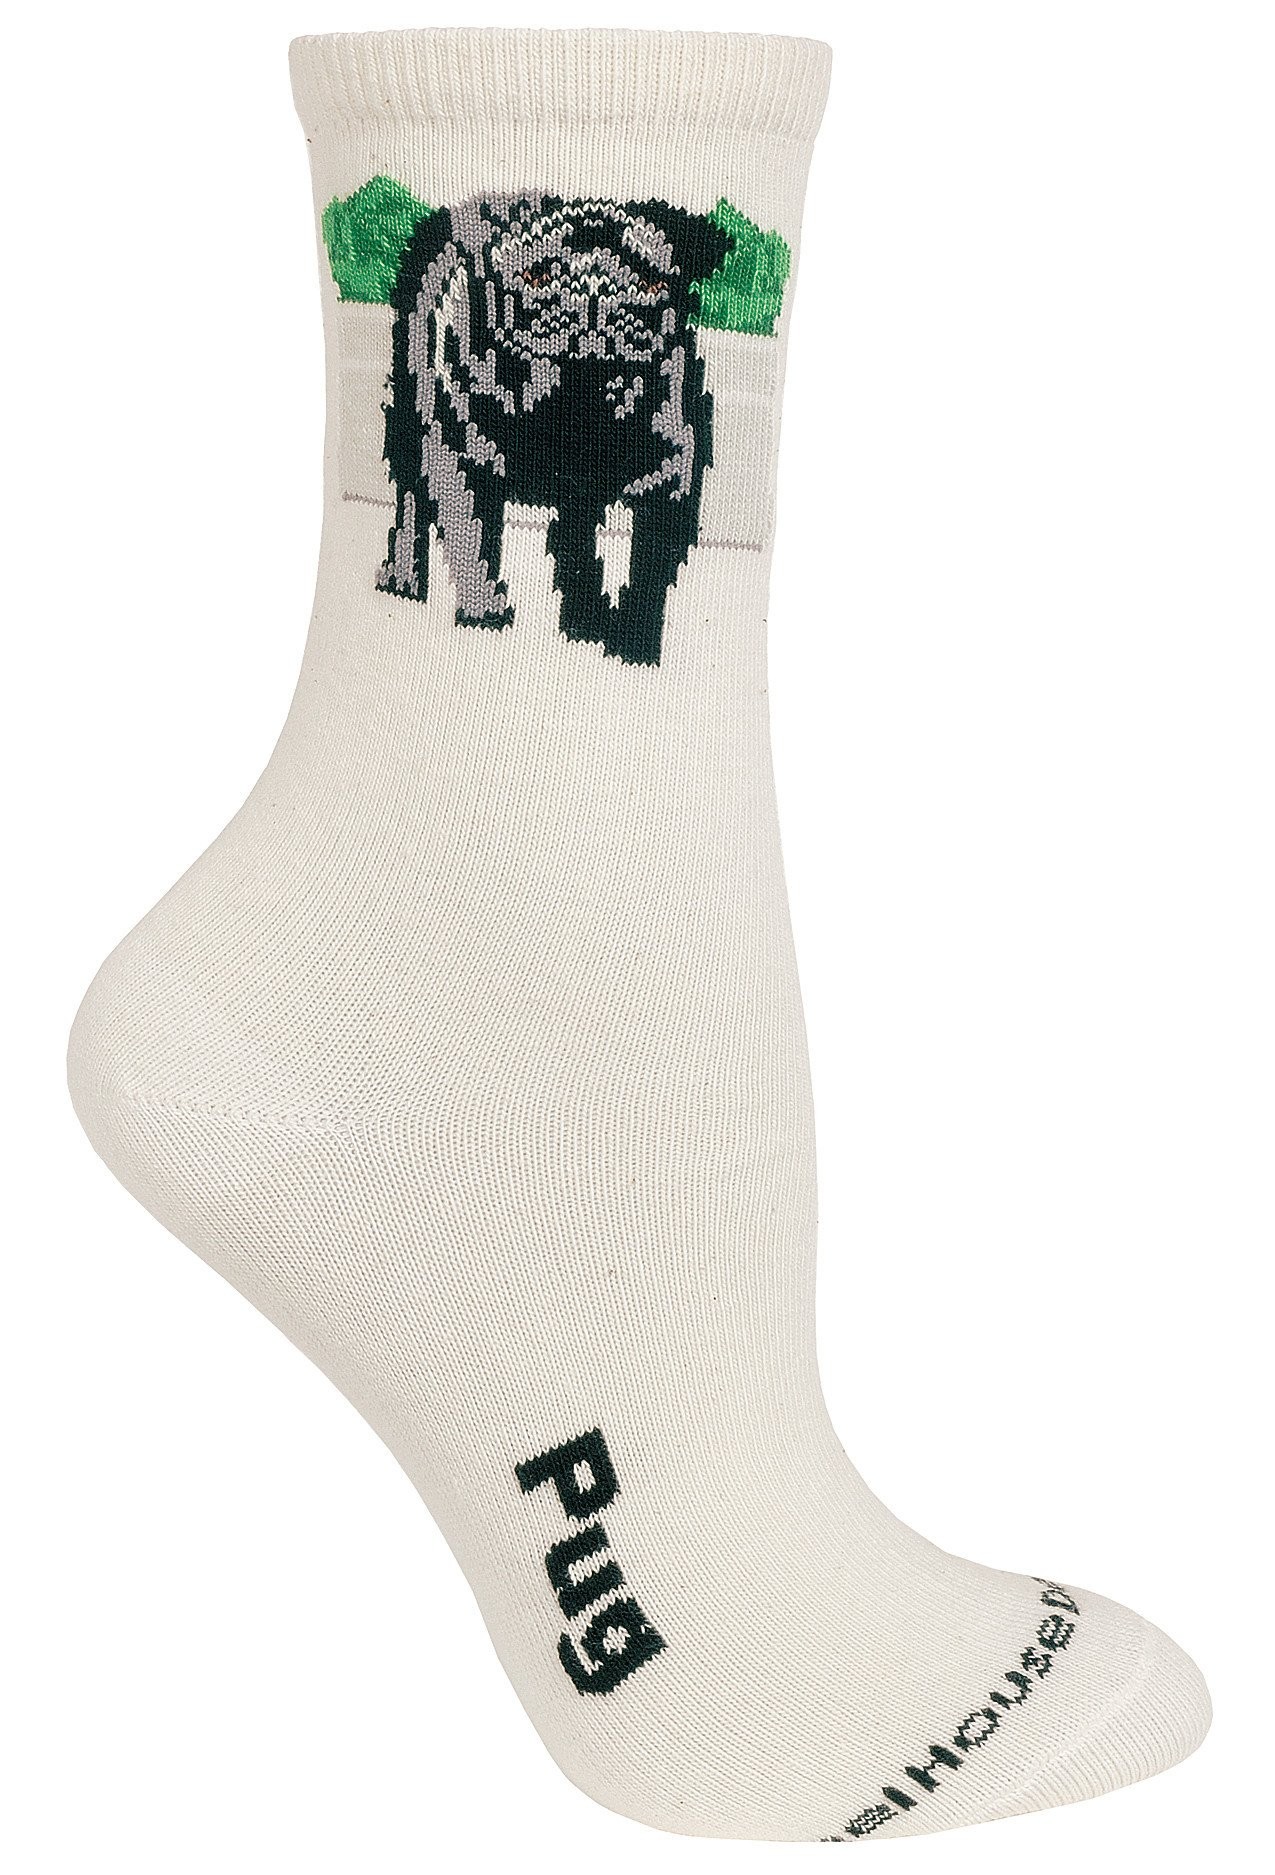 Pug Sock on Natural Size 9-11